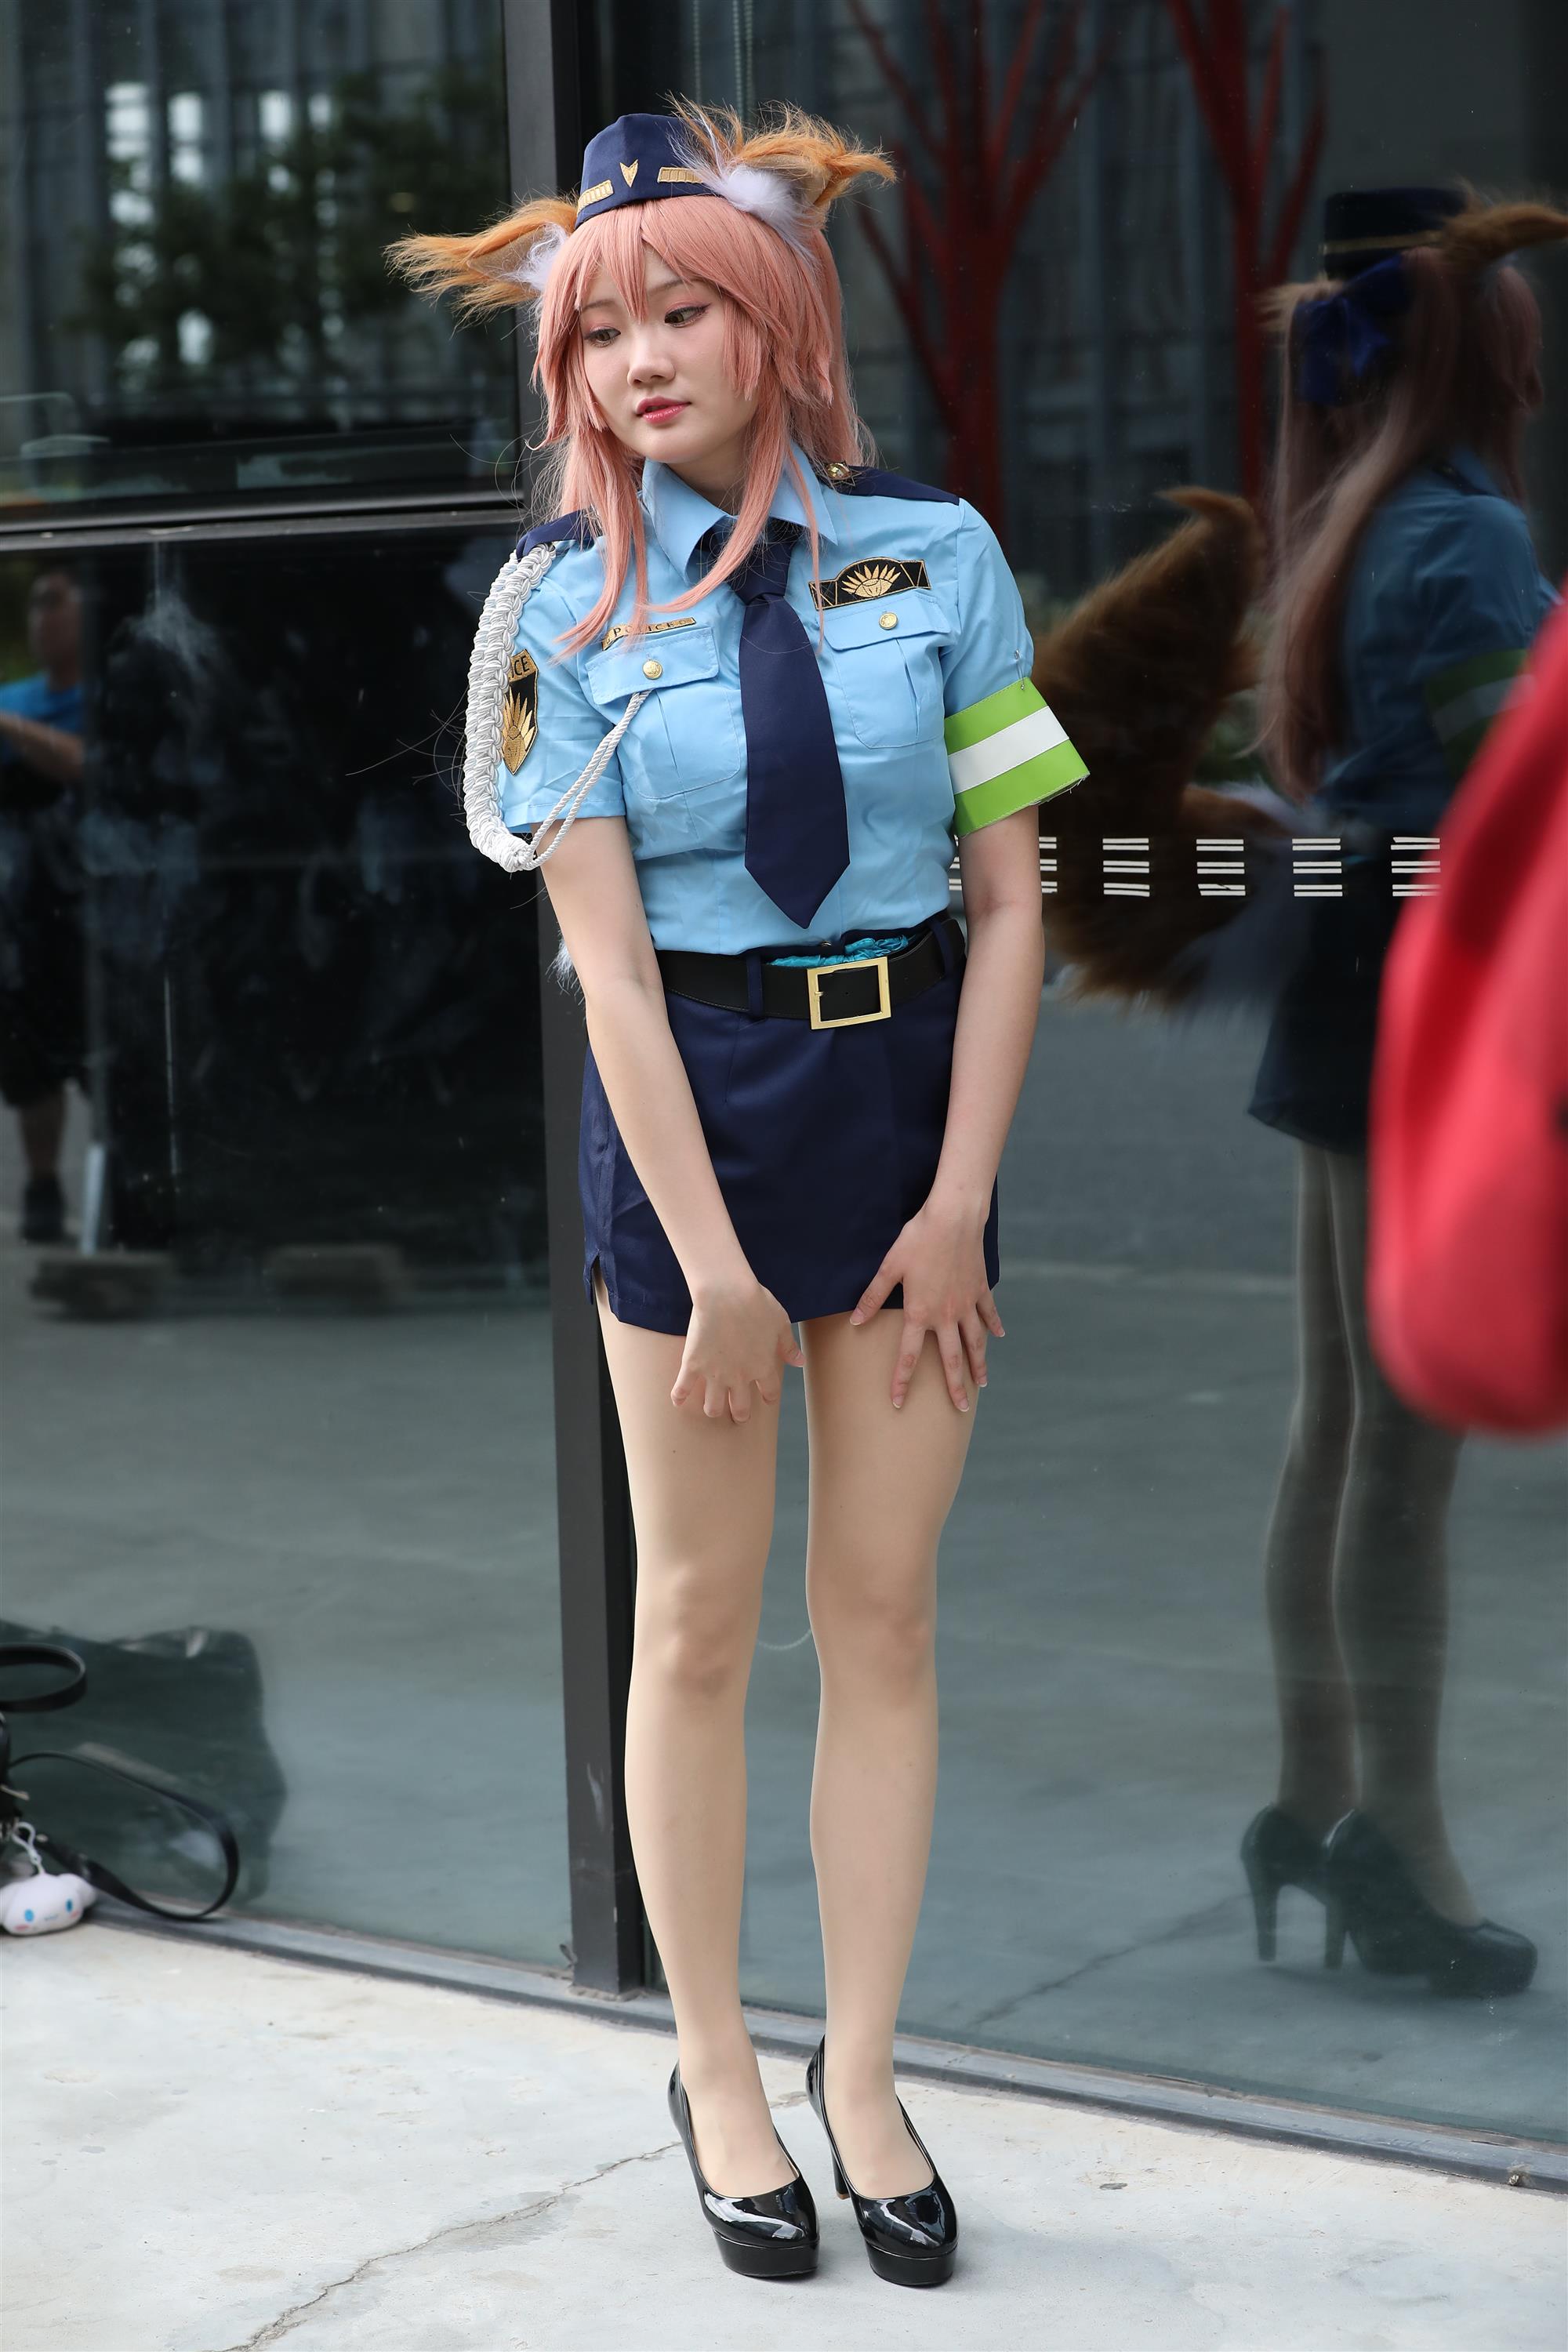 Street cosplay girl - 68.jpg